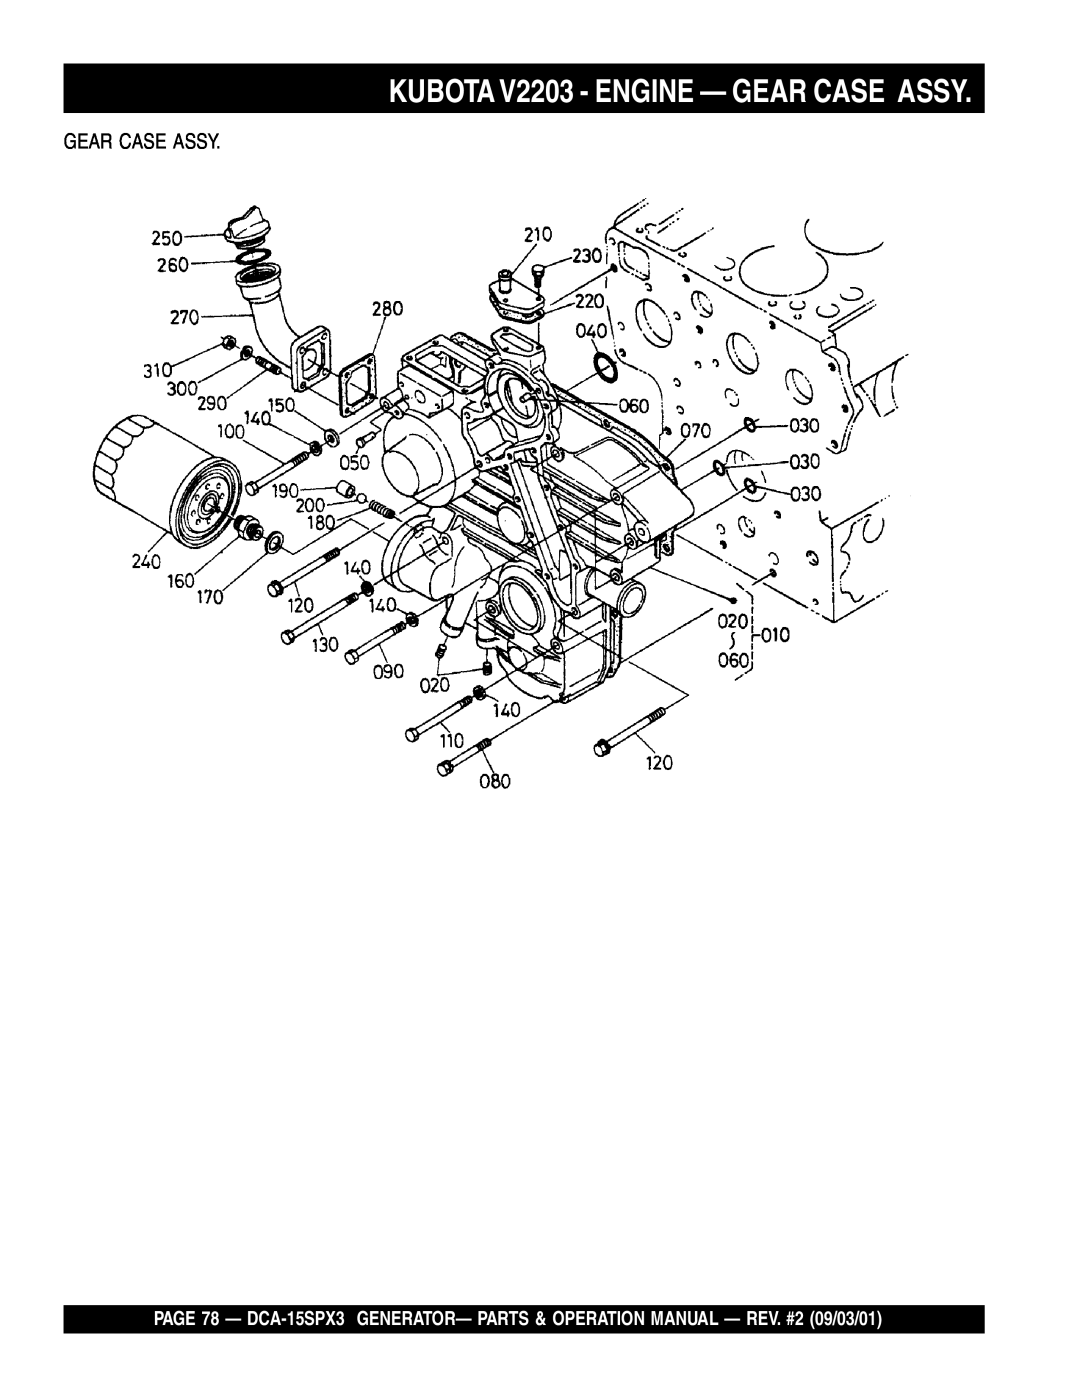 Multiquip DCA-15SPX3 operation manual KUBOTA V2203 - ENGINE — GEAR CASE ASSY, Gear Case Assy 